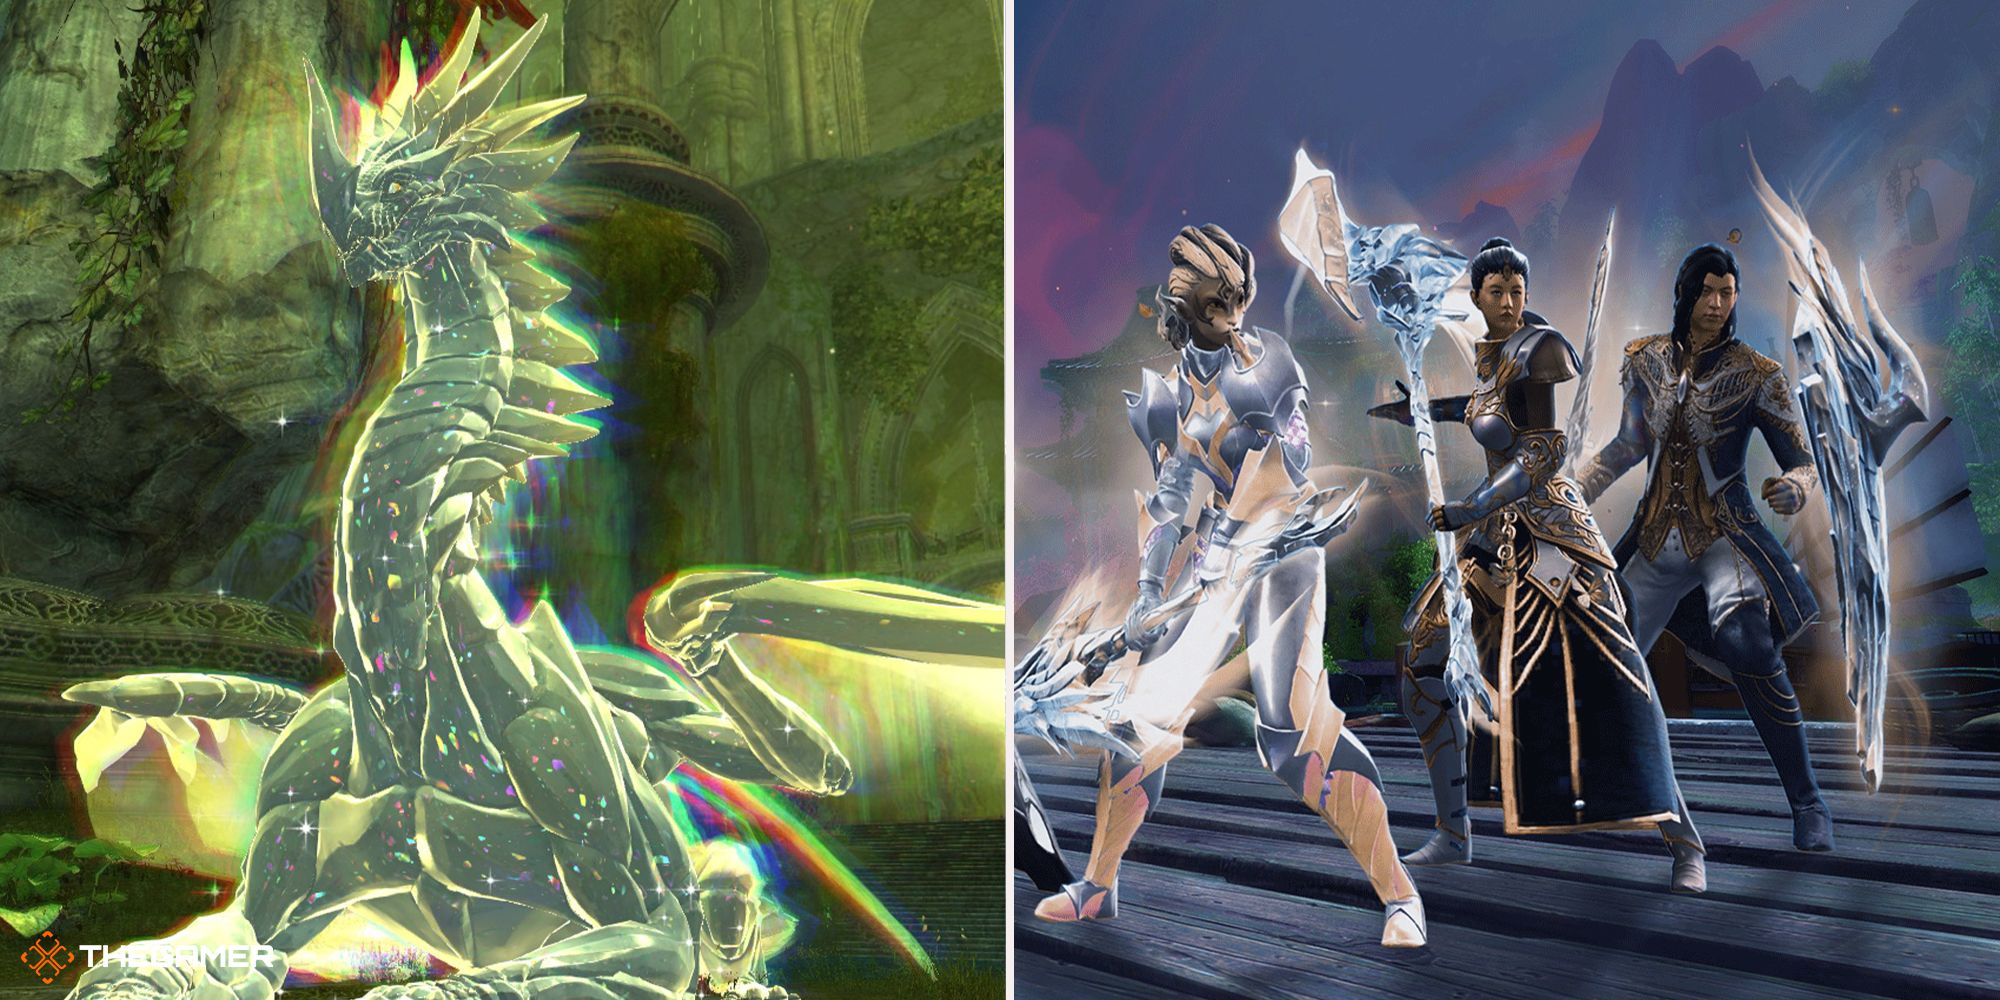 Guild Wars 2 - aurene on left, players holding legendary weapons on right